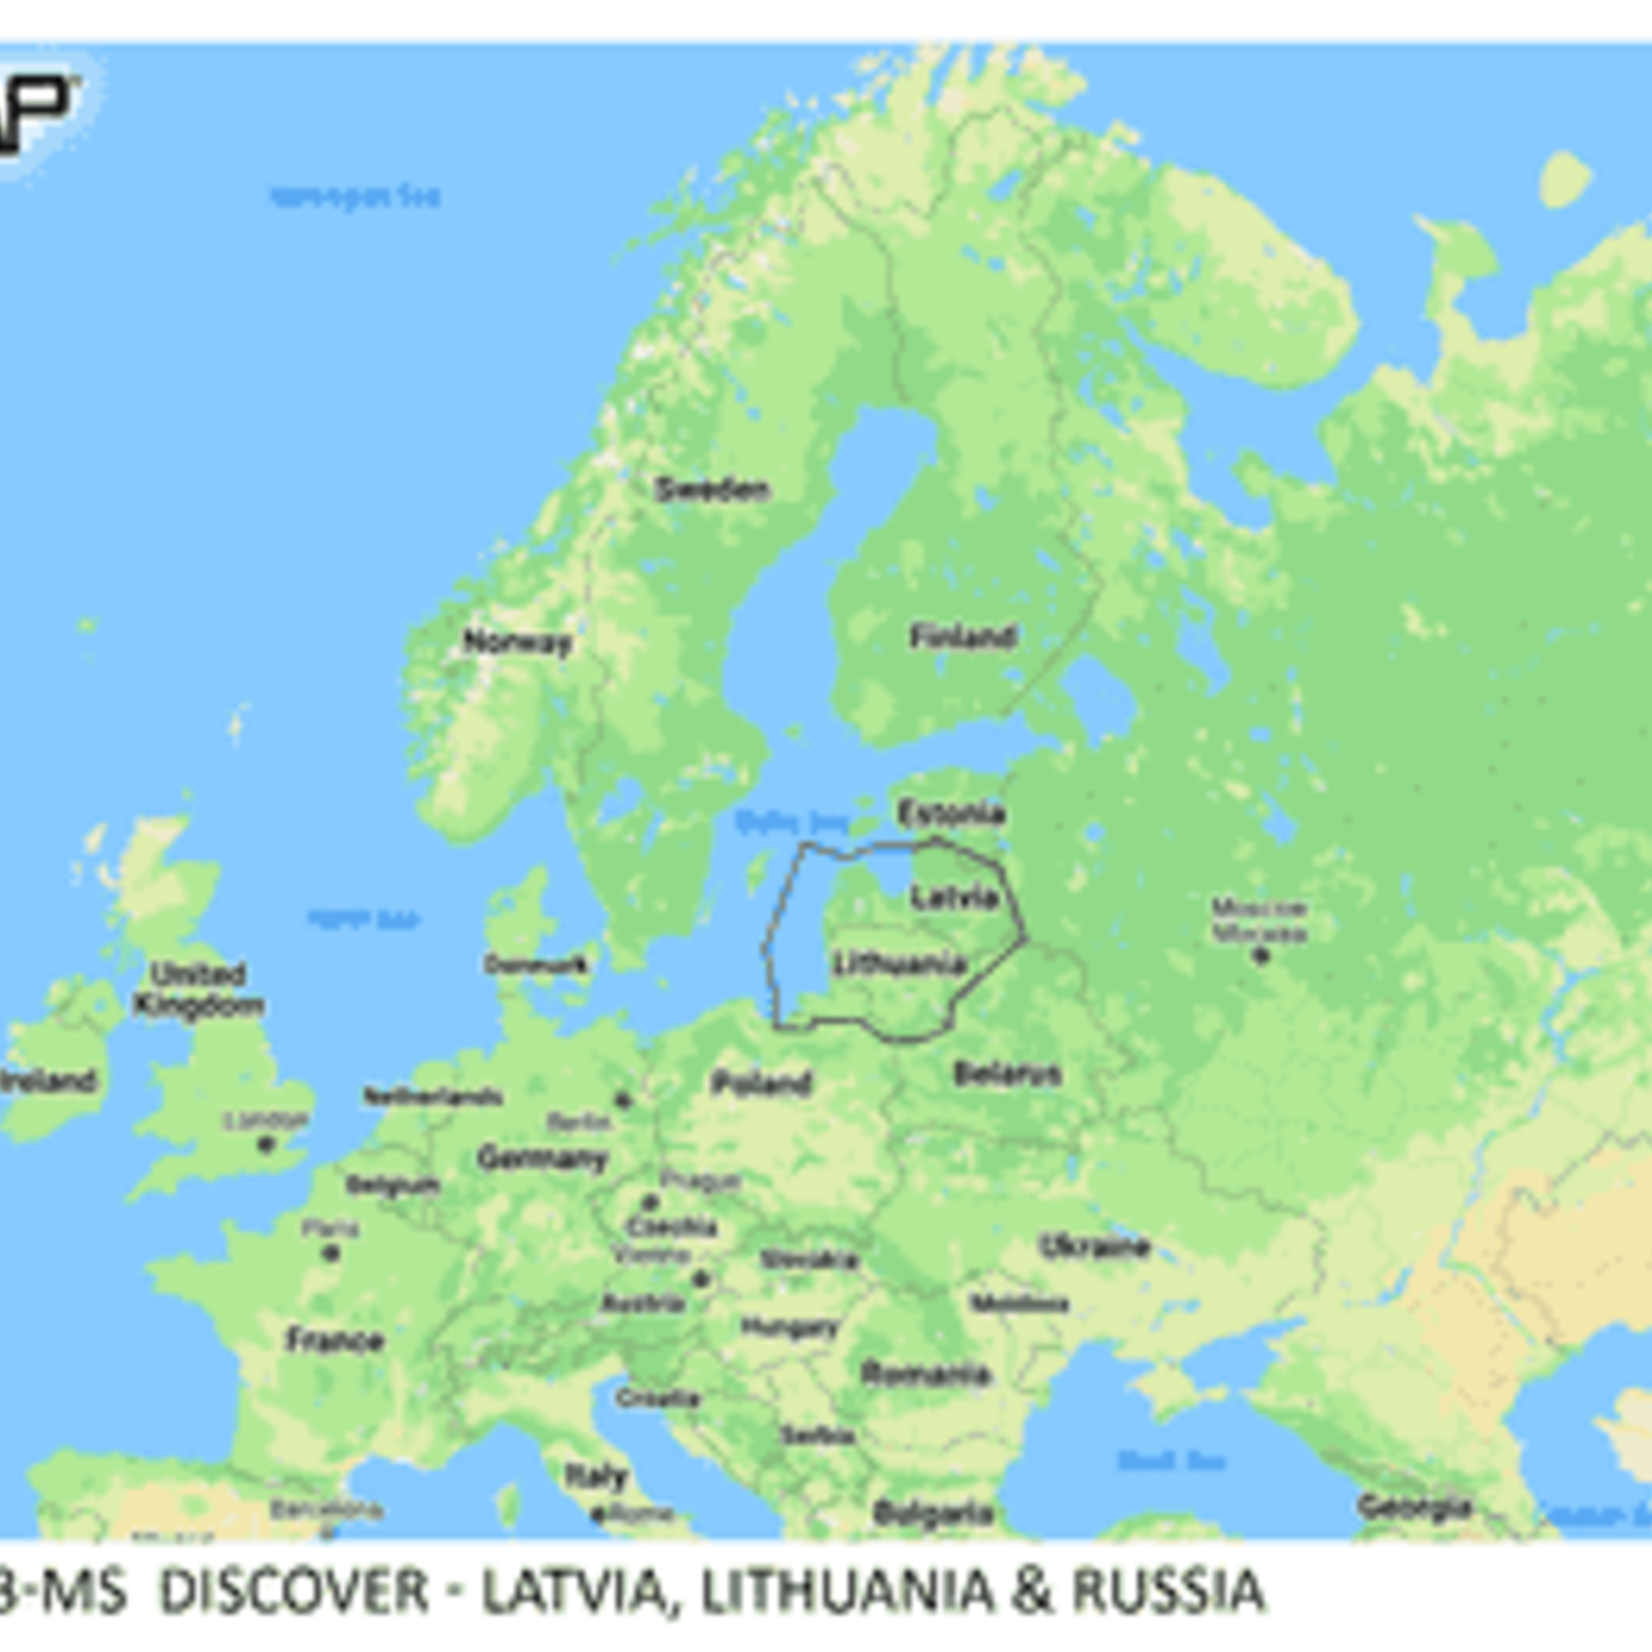 C-MAP DISCOVER - Latvia, Lithuania & Russia